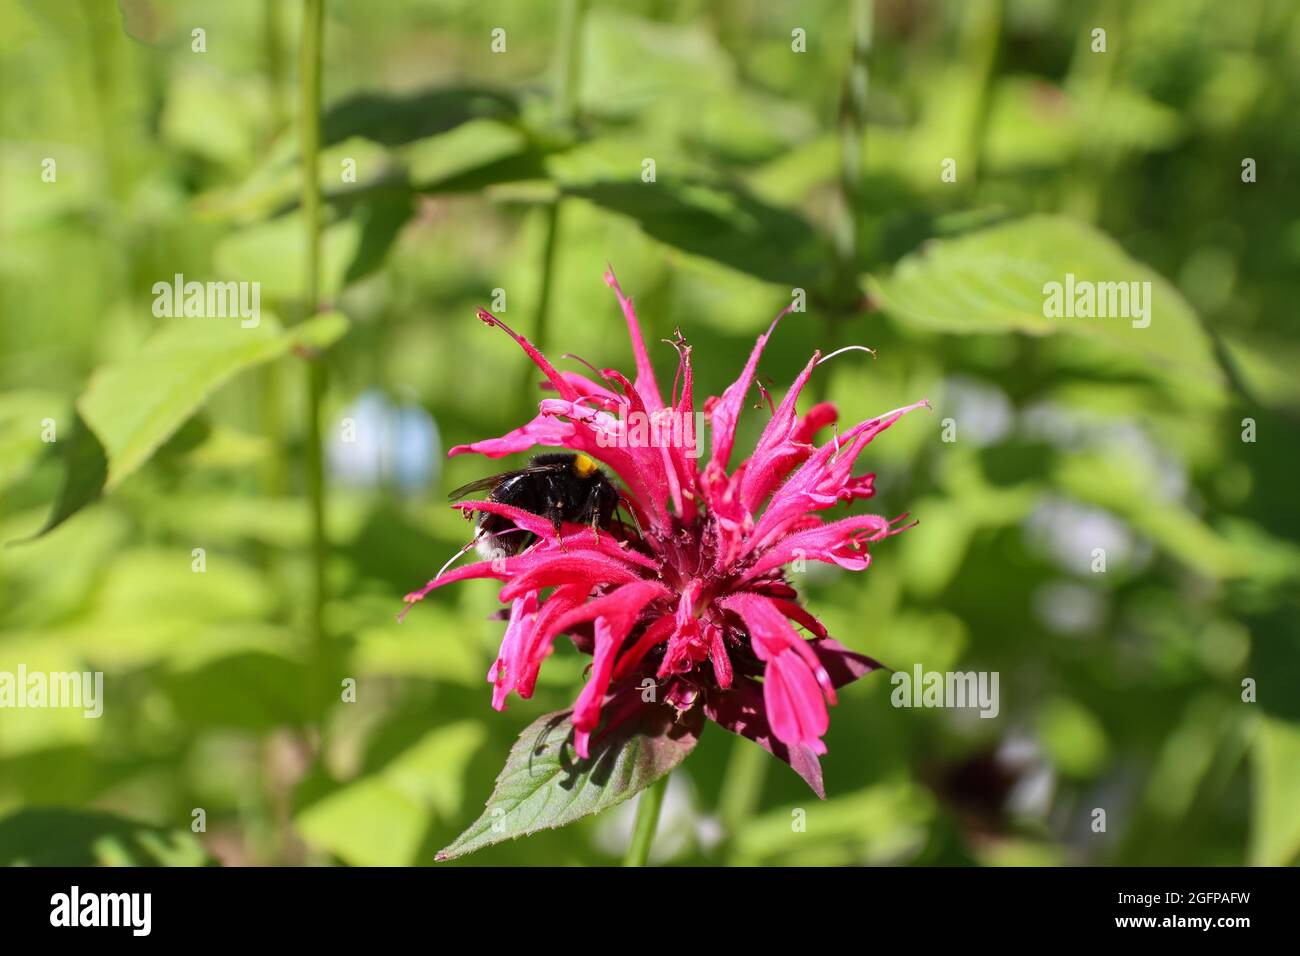 Hummel auf Bergamotte Blume, Tee Nahaufnahme Stockfotografie - Alamy